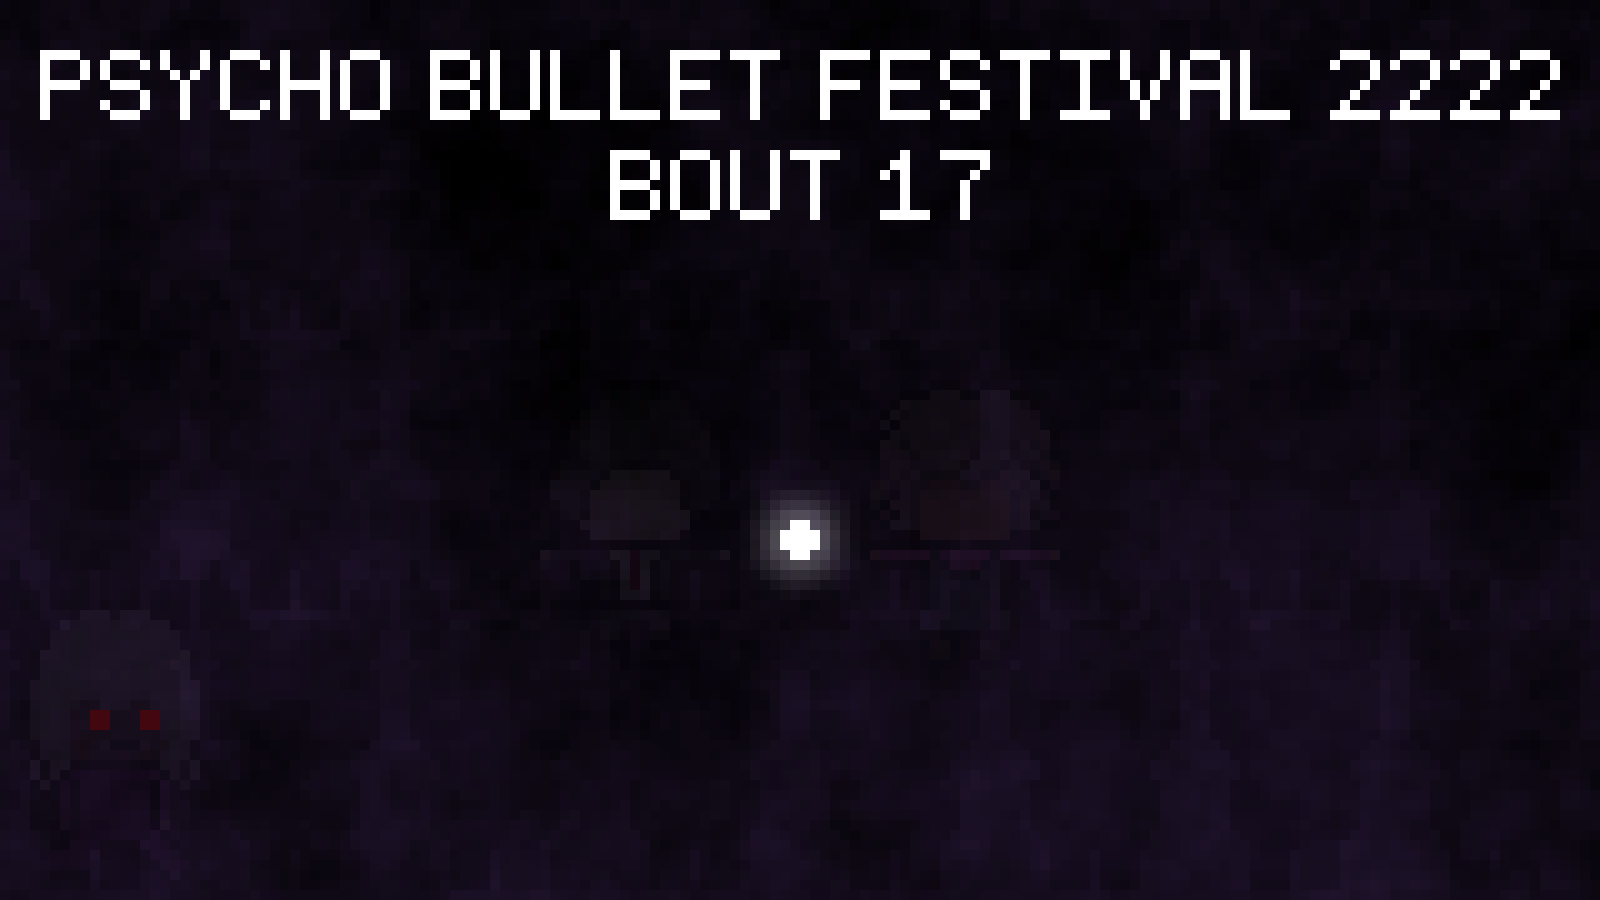 psycho-bullet-festival-2222-ch-17.png